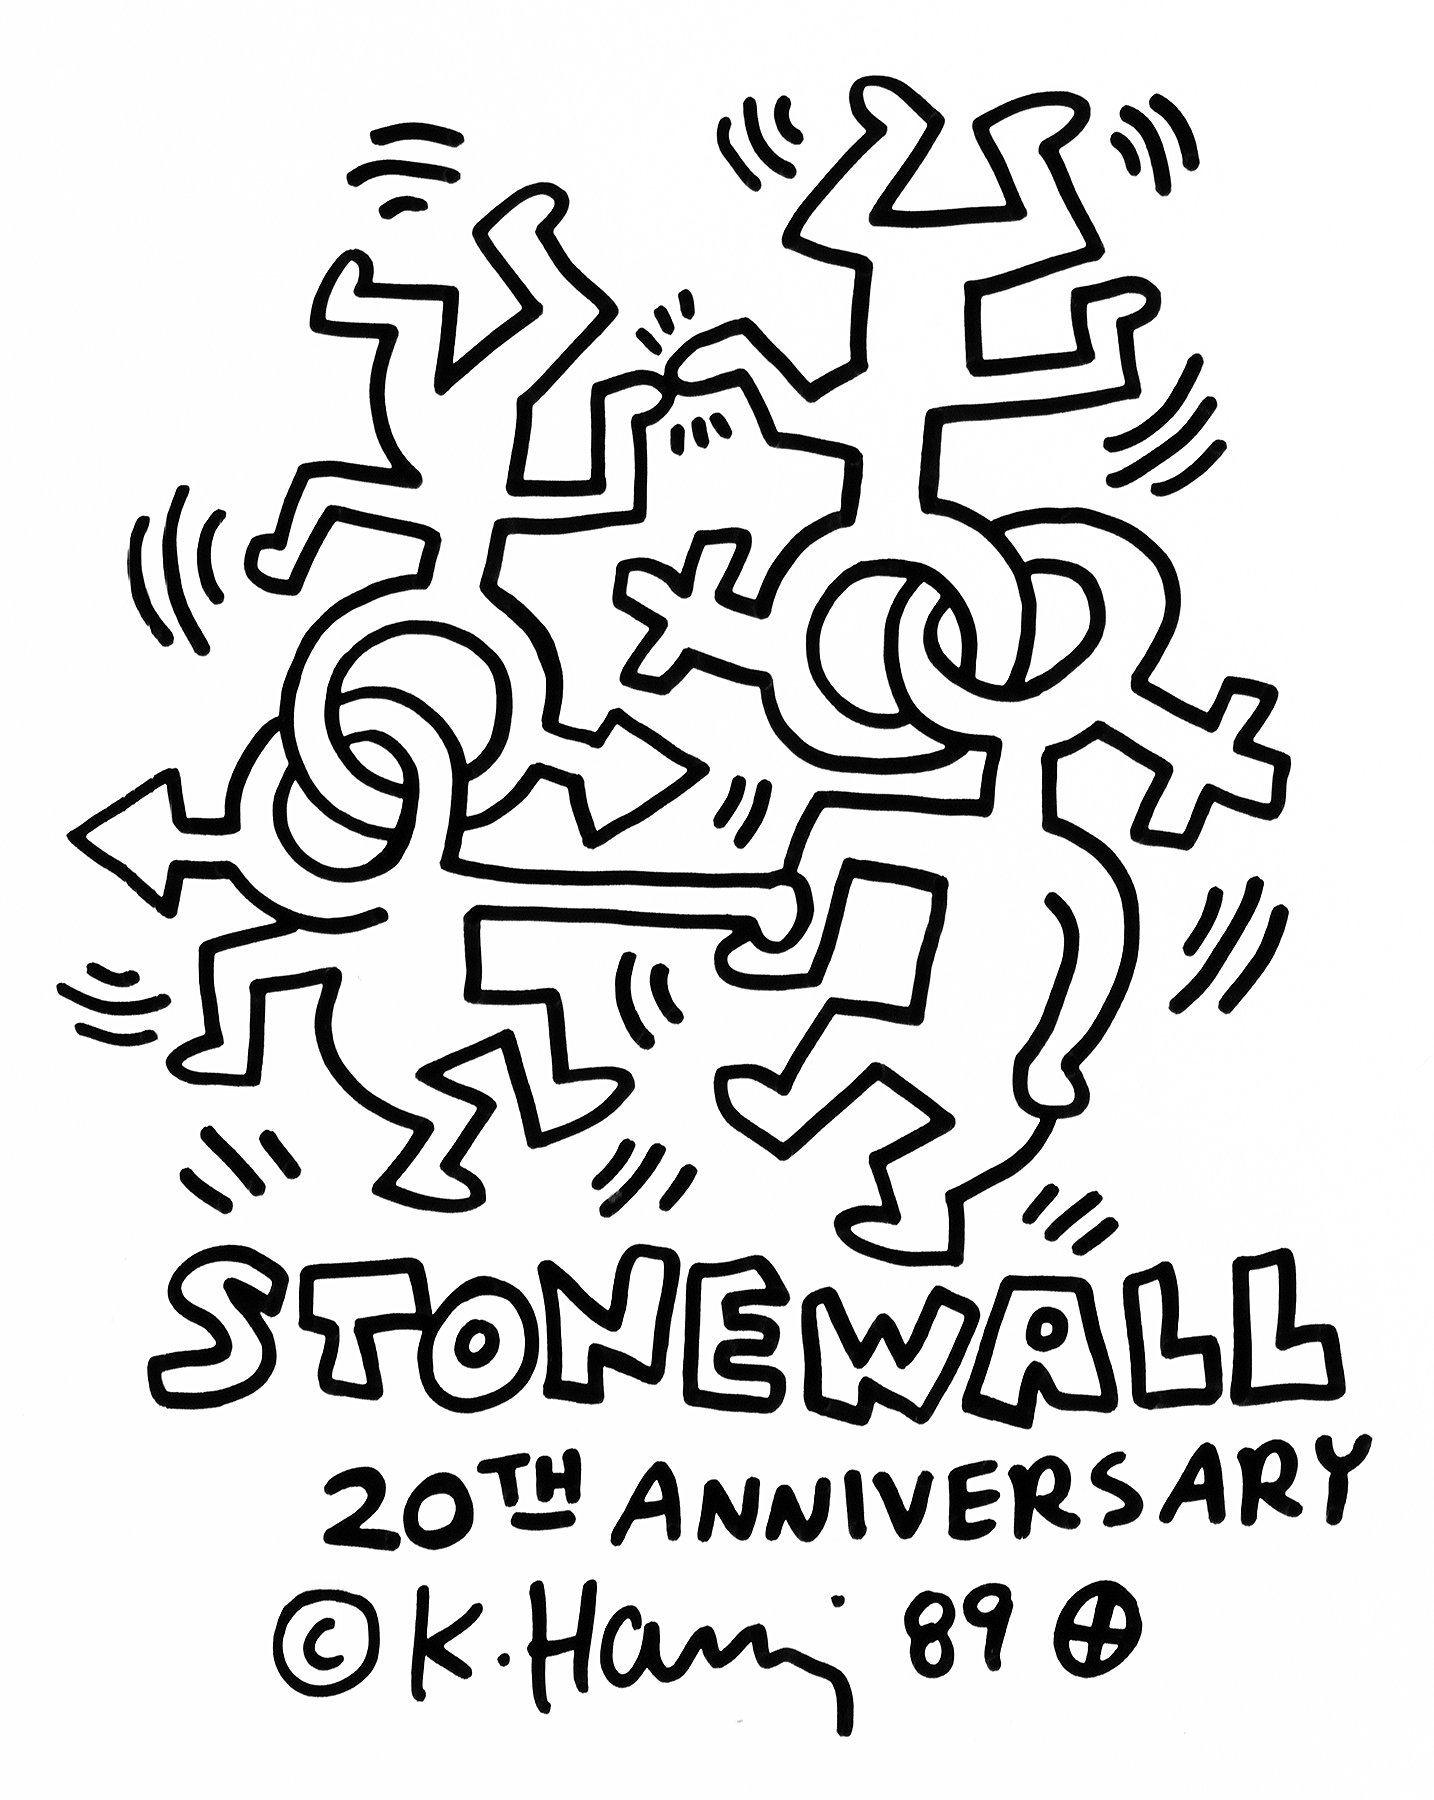 New York Yankees unveil plaque commemorating Stonewall Inn uprising